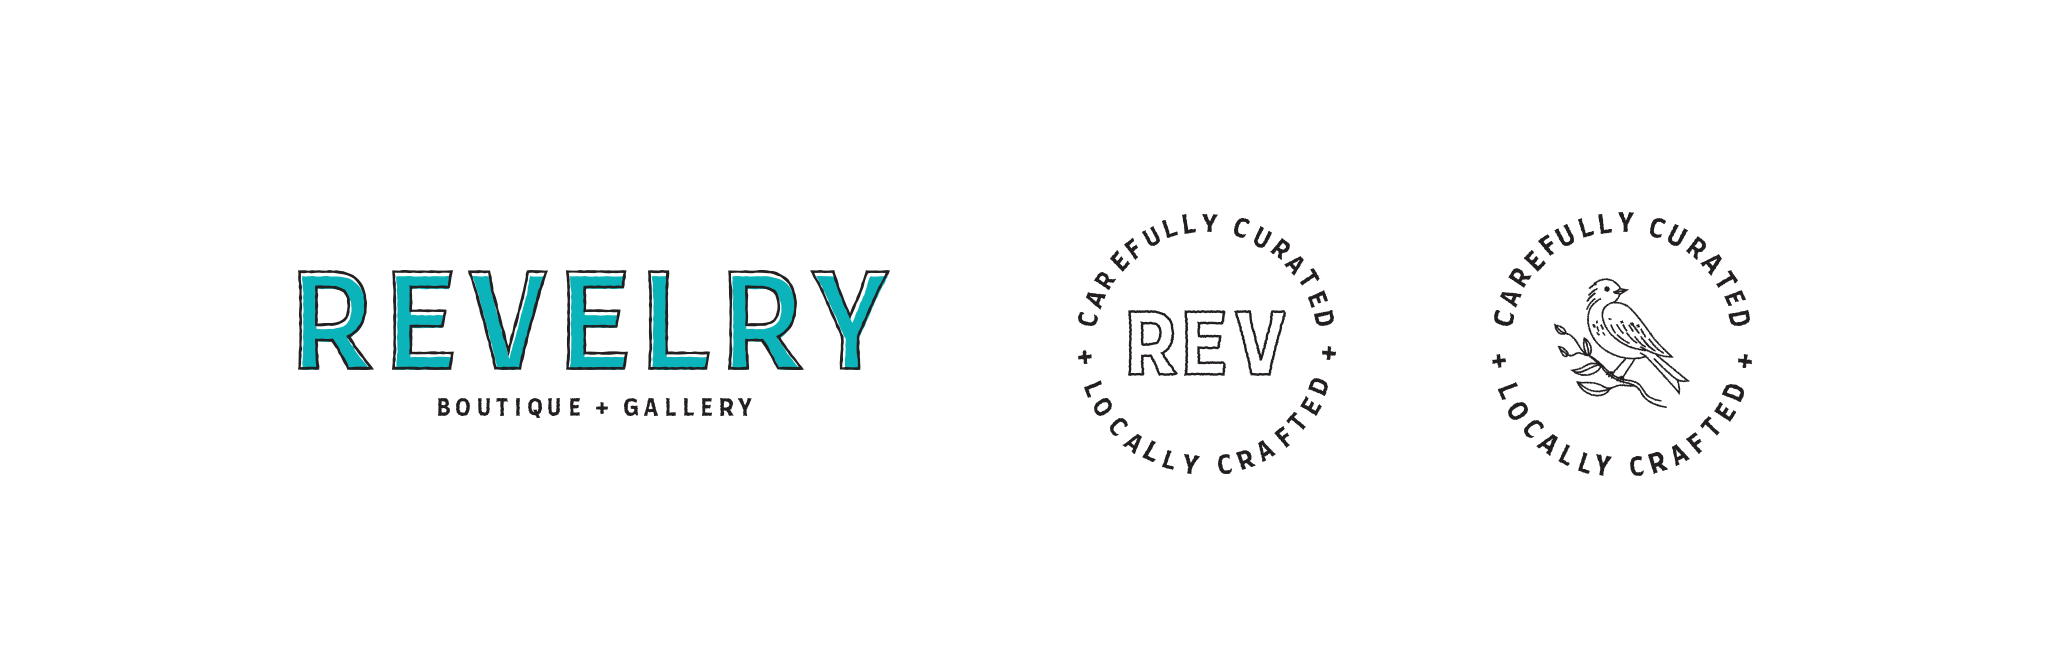 Revelry wordmark and logomarks.